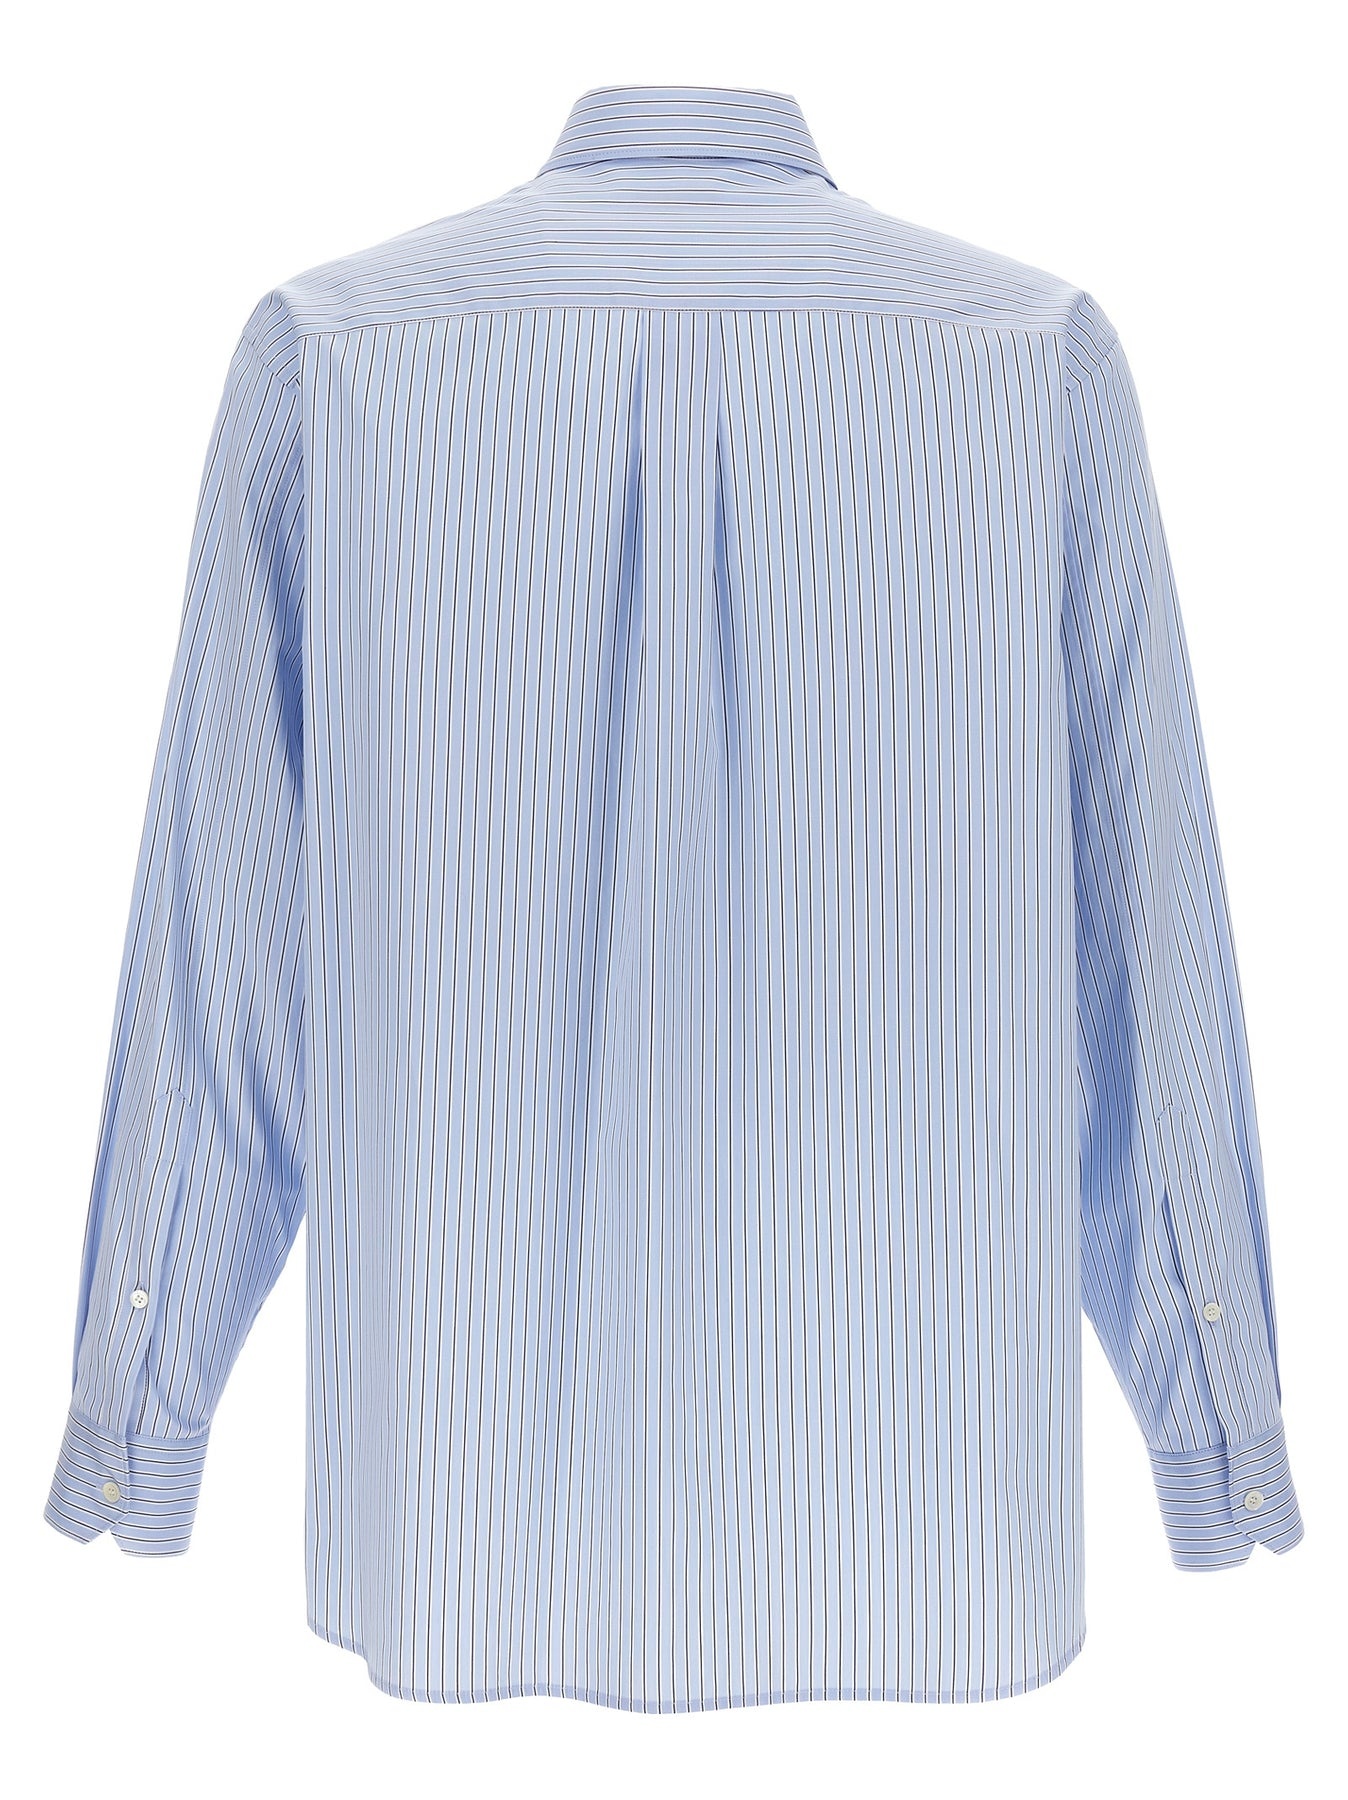 Valentino Striped Shirt Shirt, Blouse Light Blue - 2